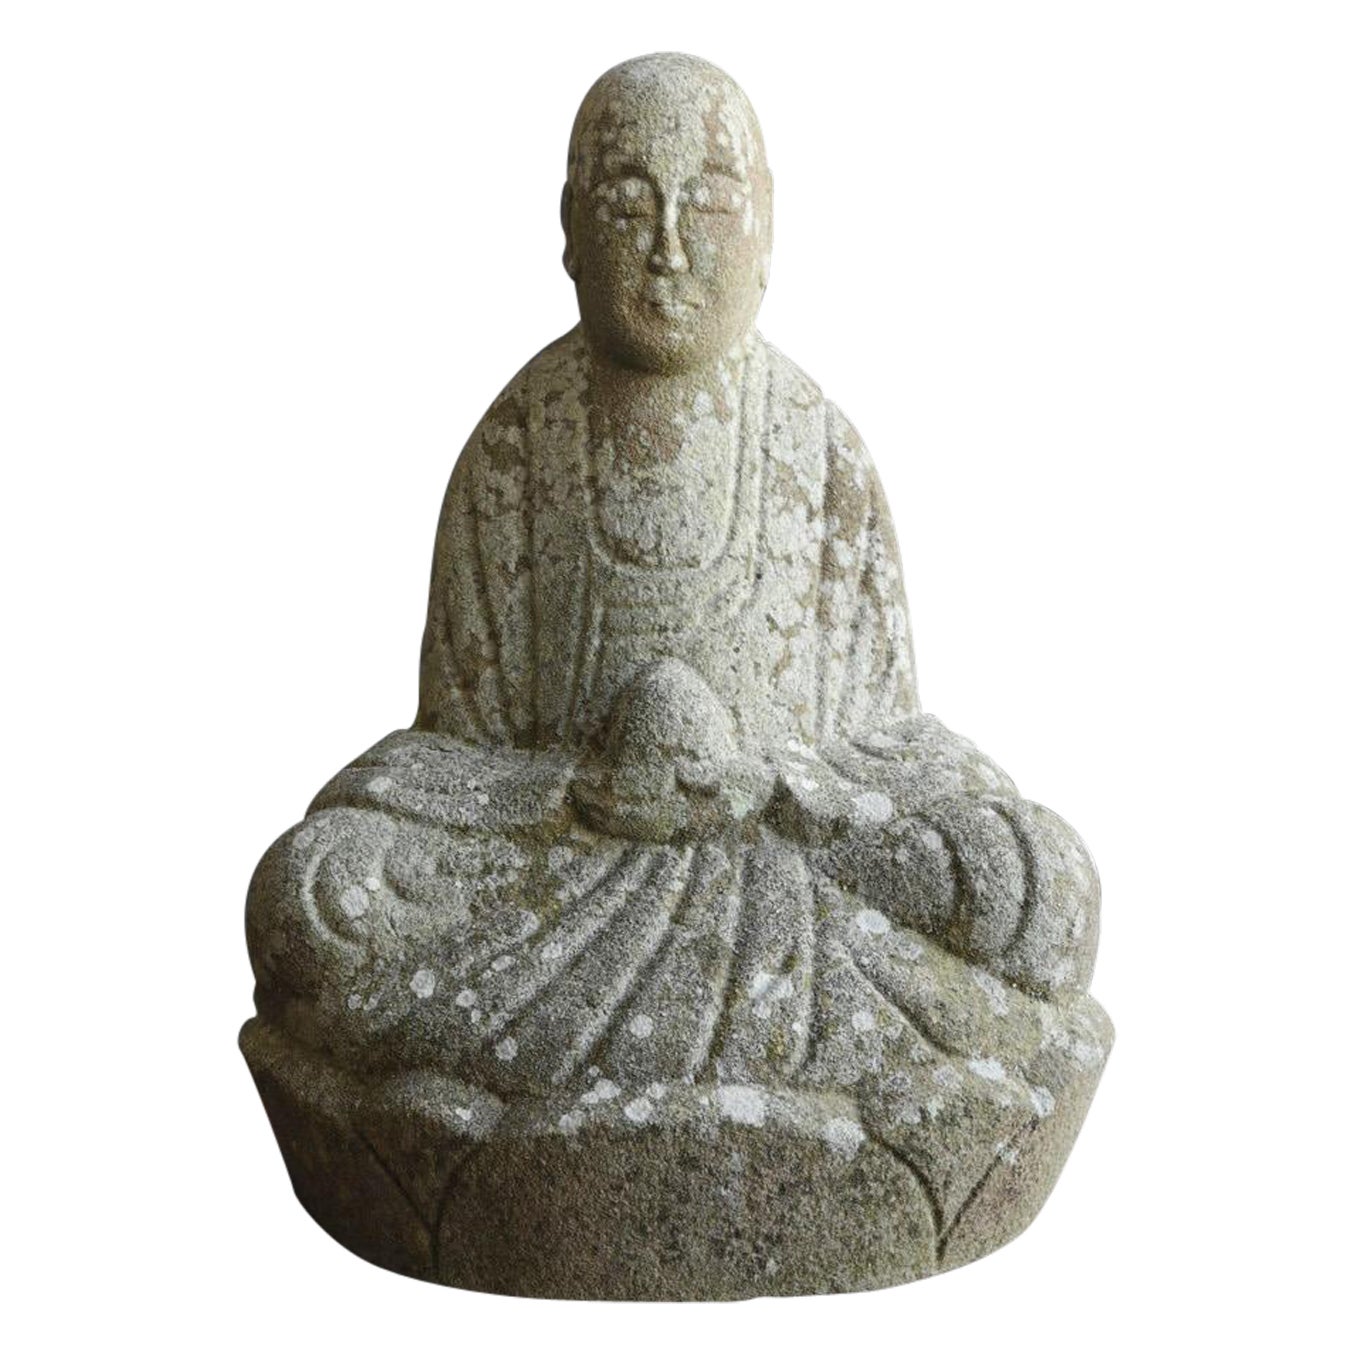 Edo Period Stone Buddha/1800s/Japanese Antique Buddha Statue/Garden Ornament